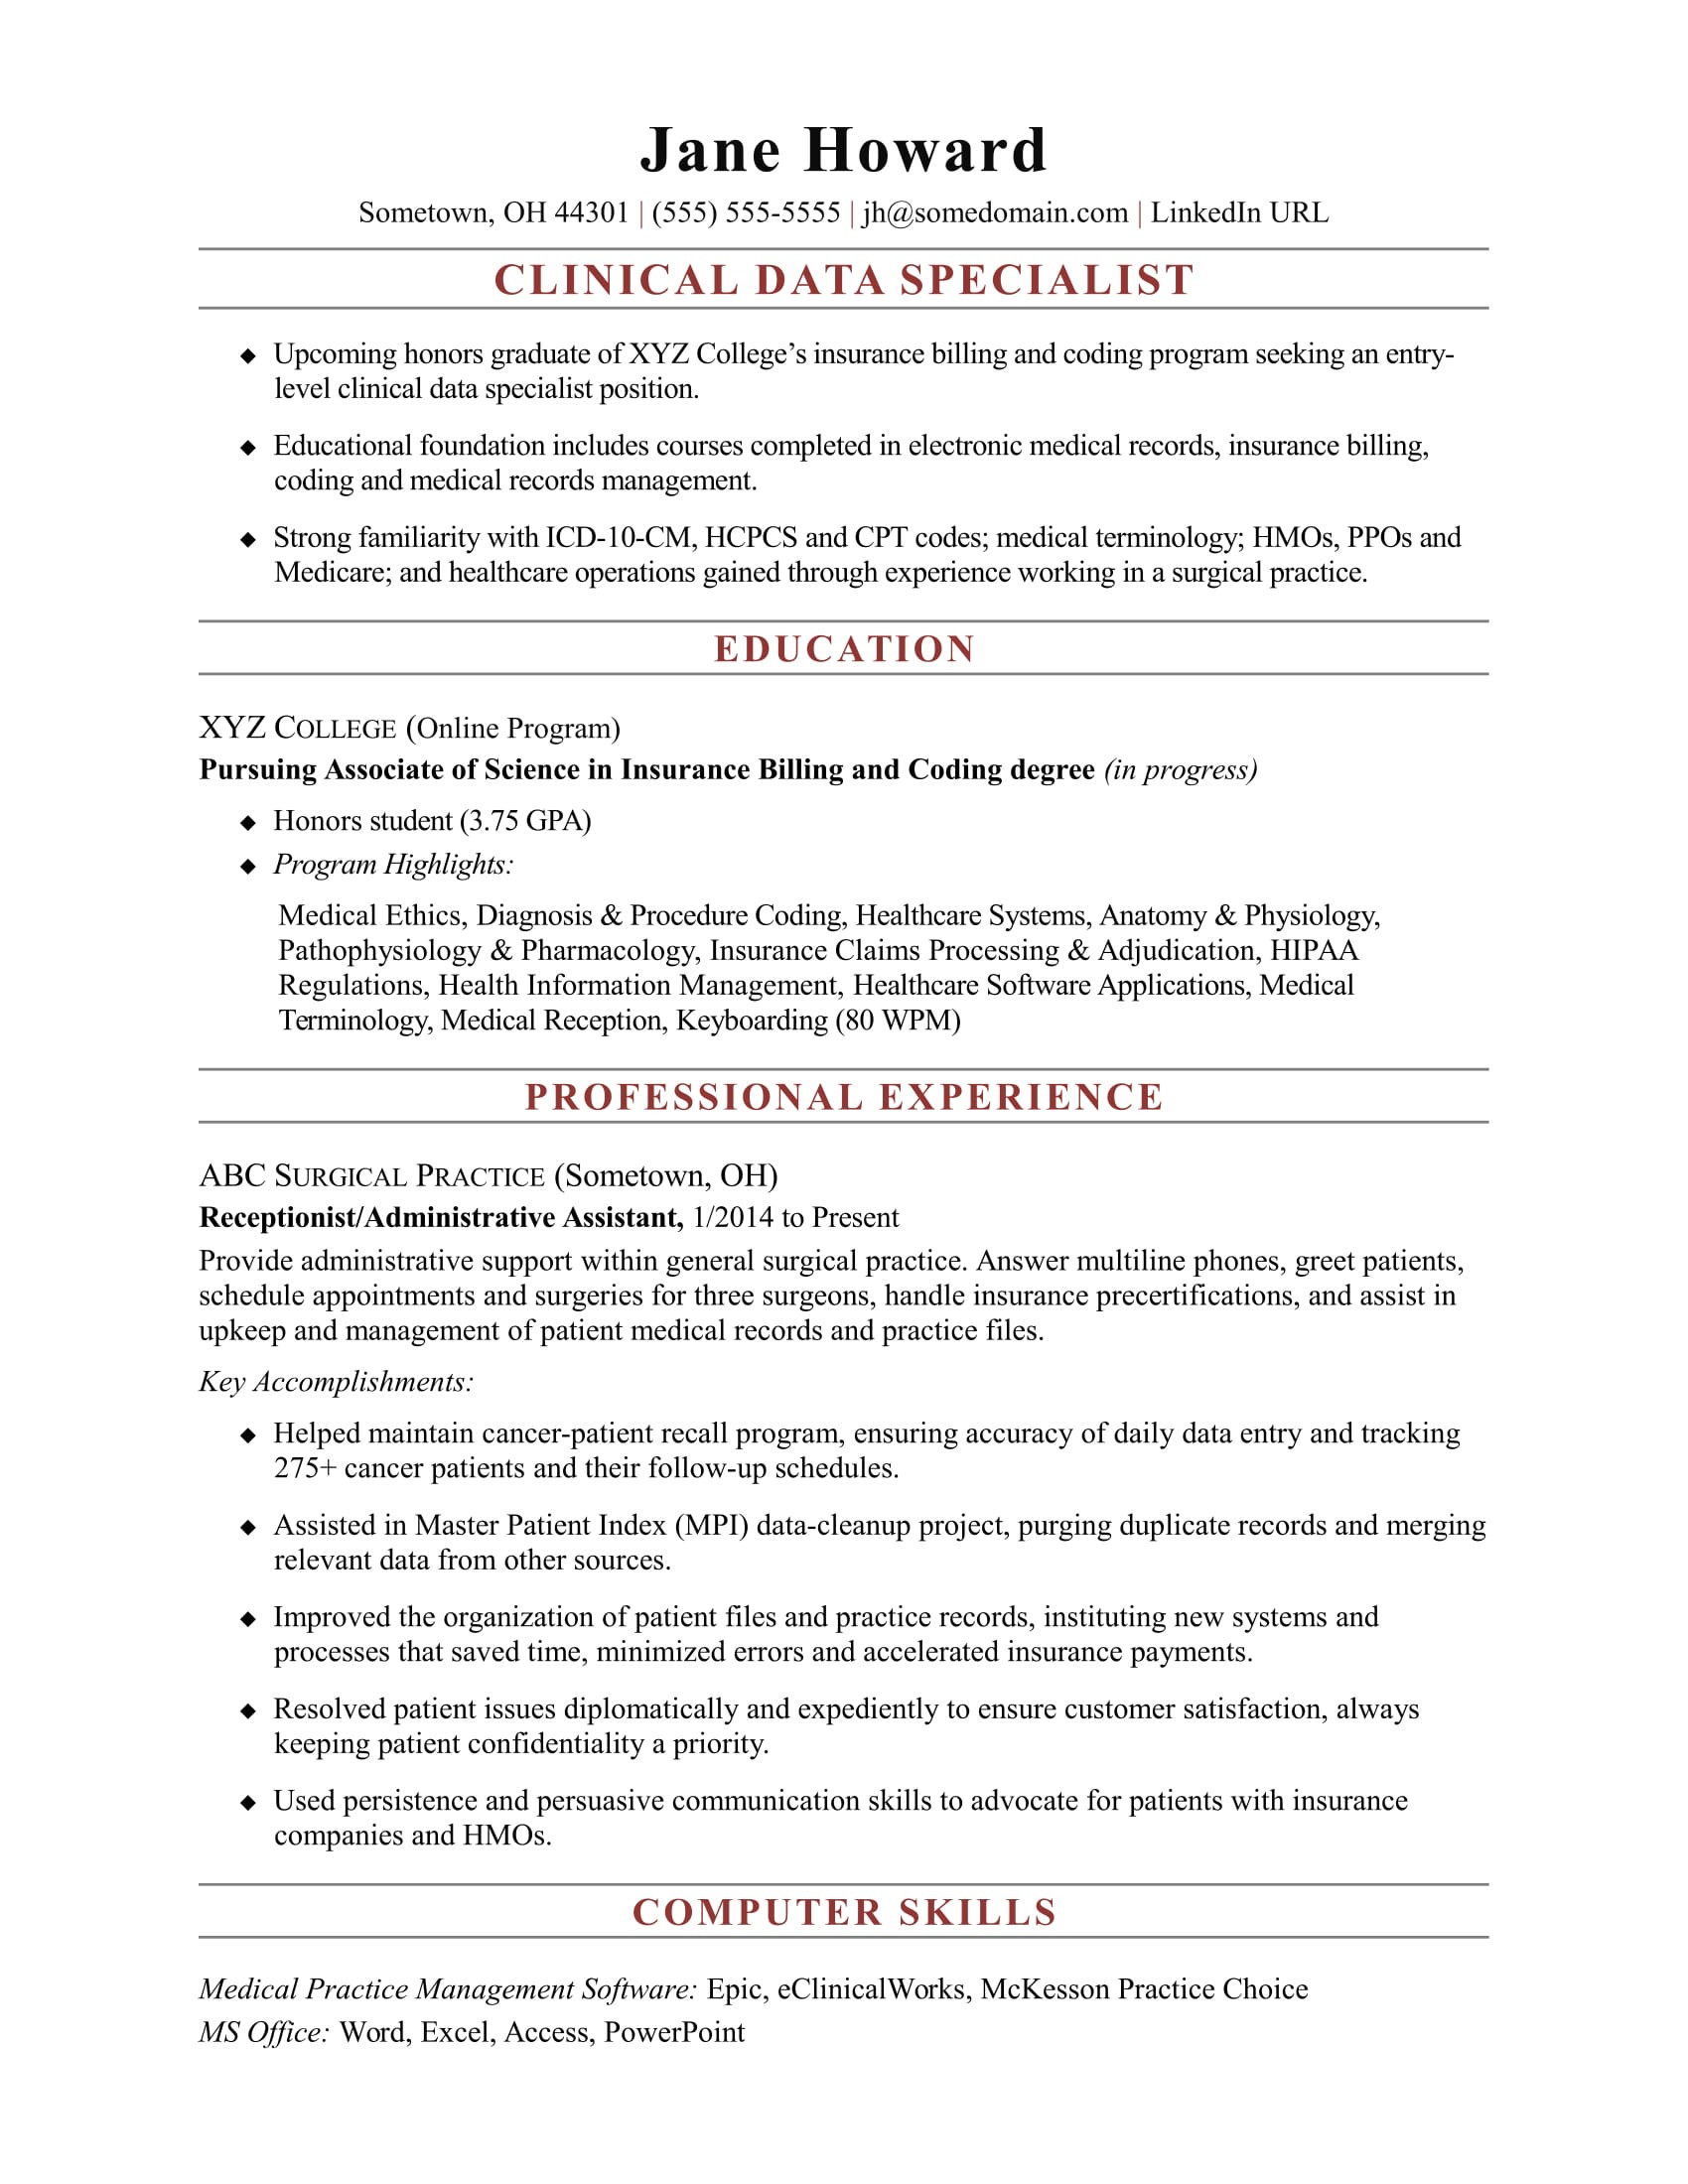 Sample Resume for Health Administration Fresher Entry-level Clinical Data Specialist Resume Sample Monster.com